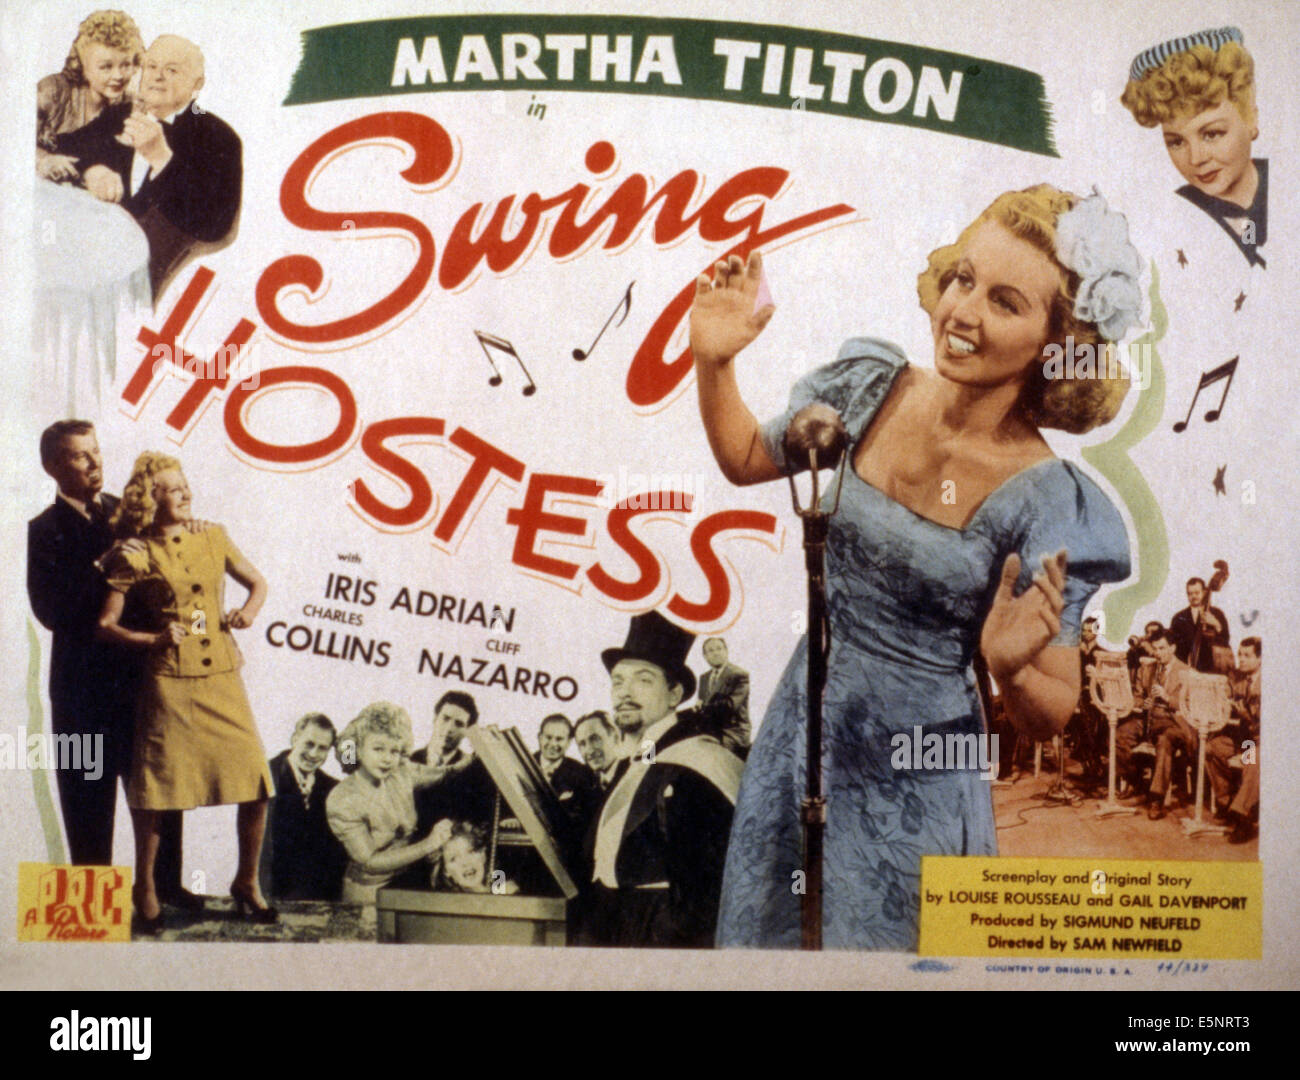 SWING HOSTESS, left: Iris Adrian, right: Martha Tilton, 1944. Stock Photo